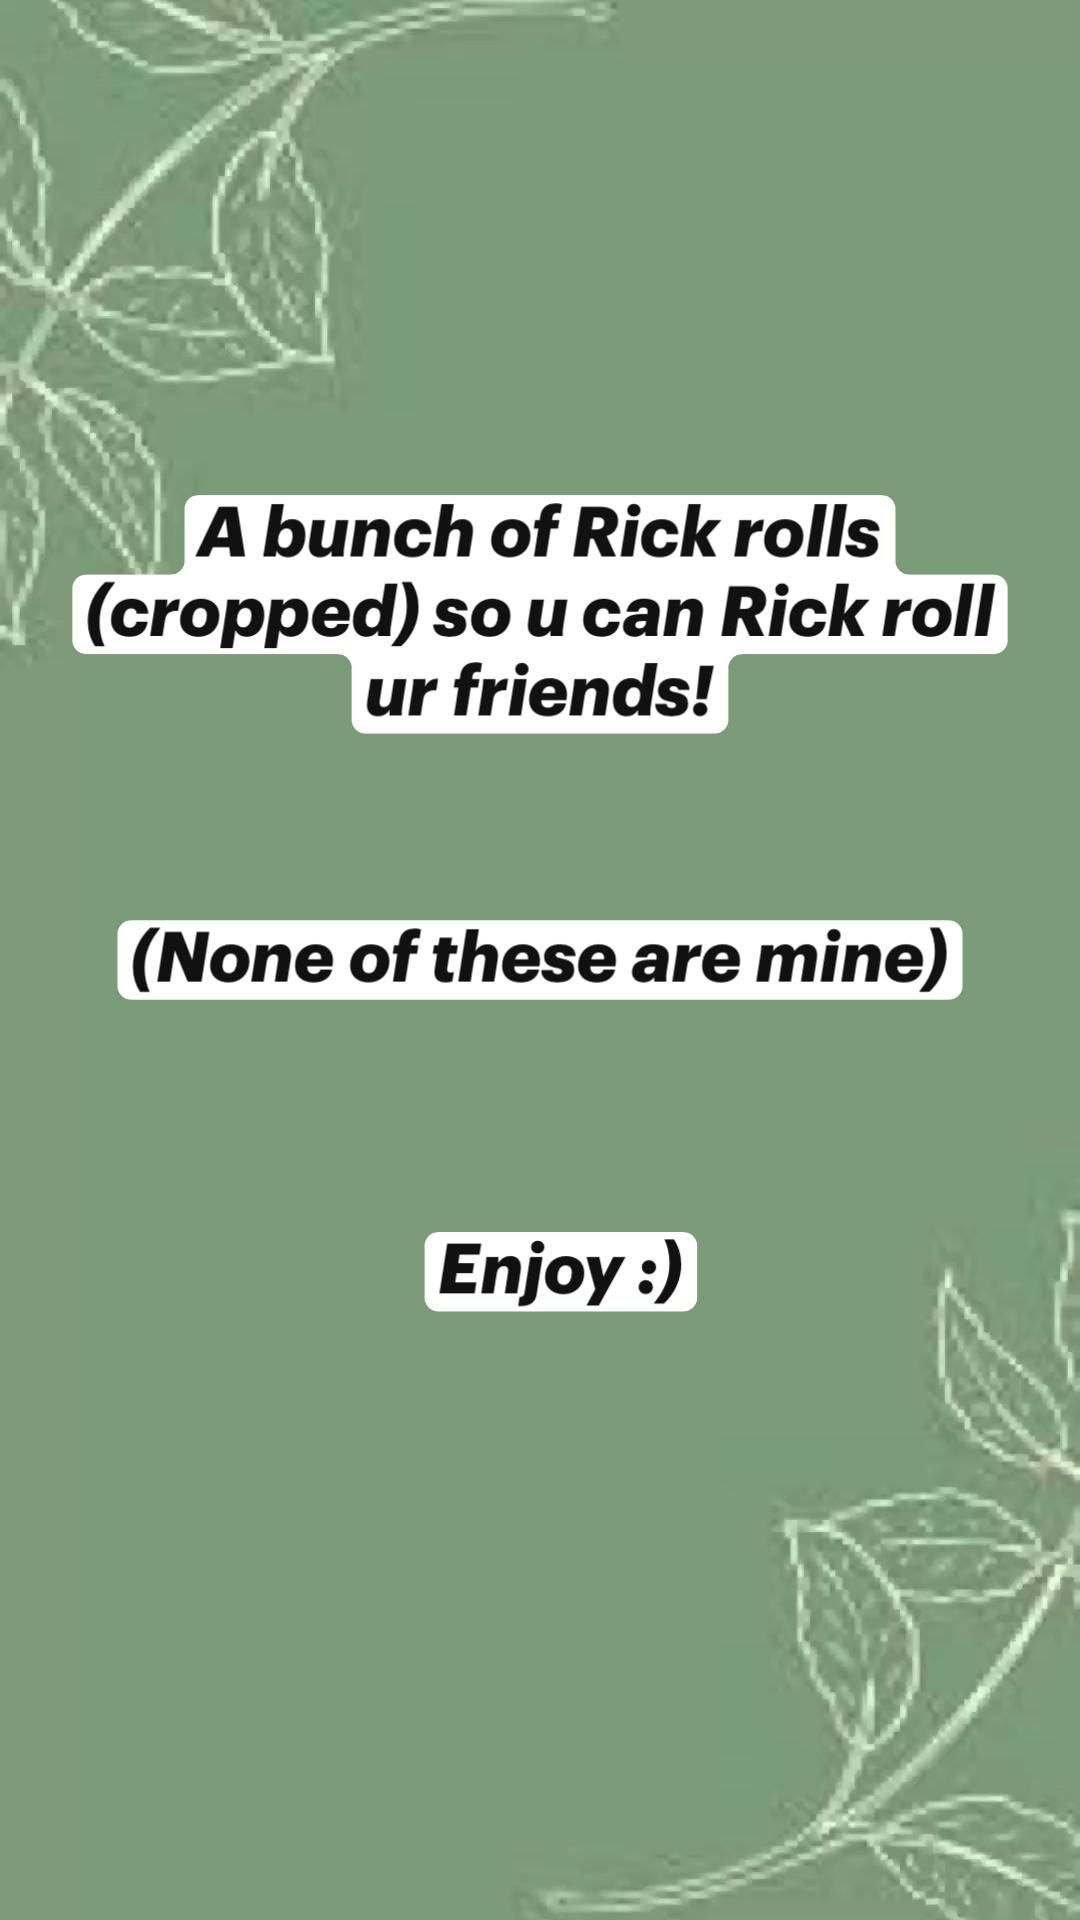 A bunch of Rick rolls (cropped) so u can Rick roll ur friends!